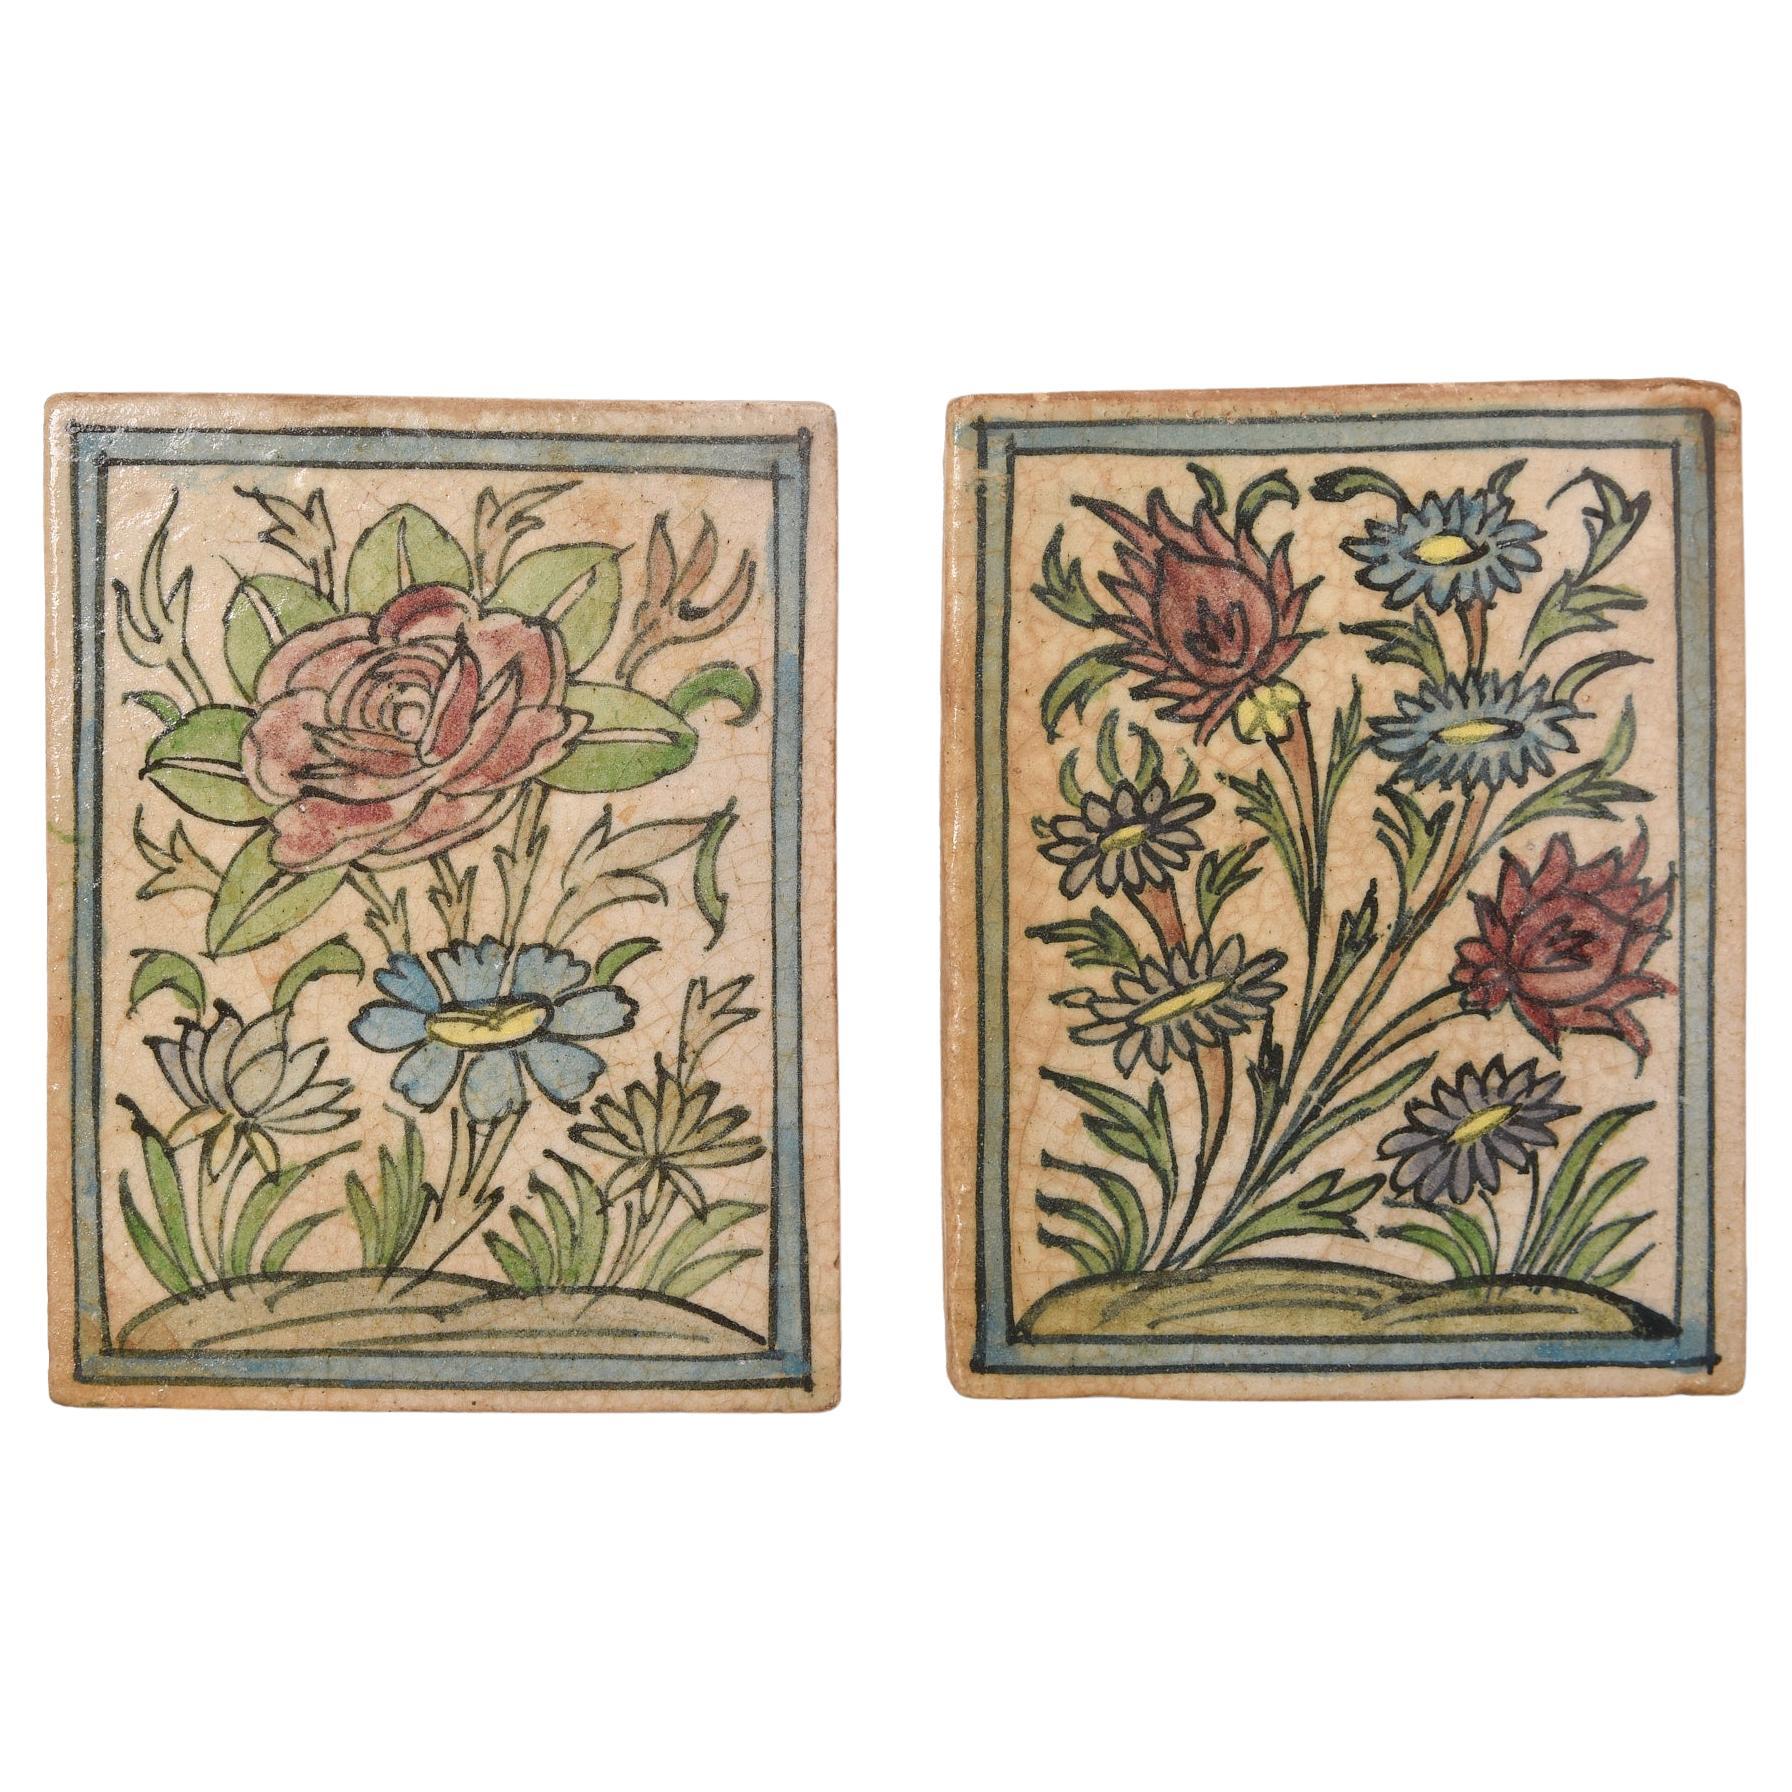 Pair of Antique "Flowers" Tiles